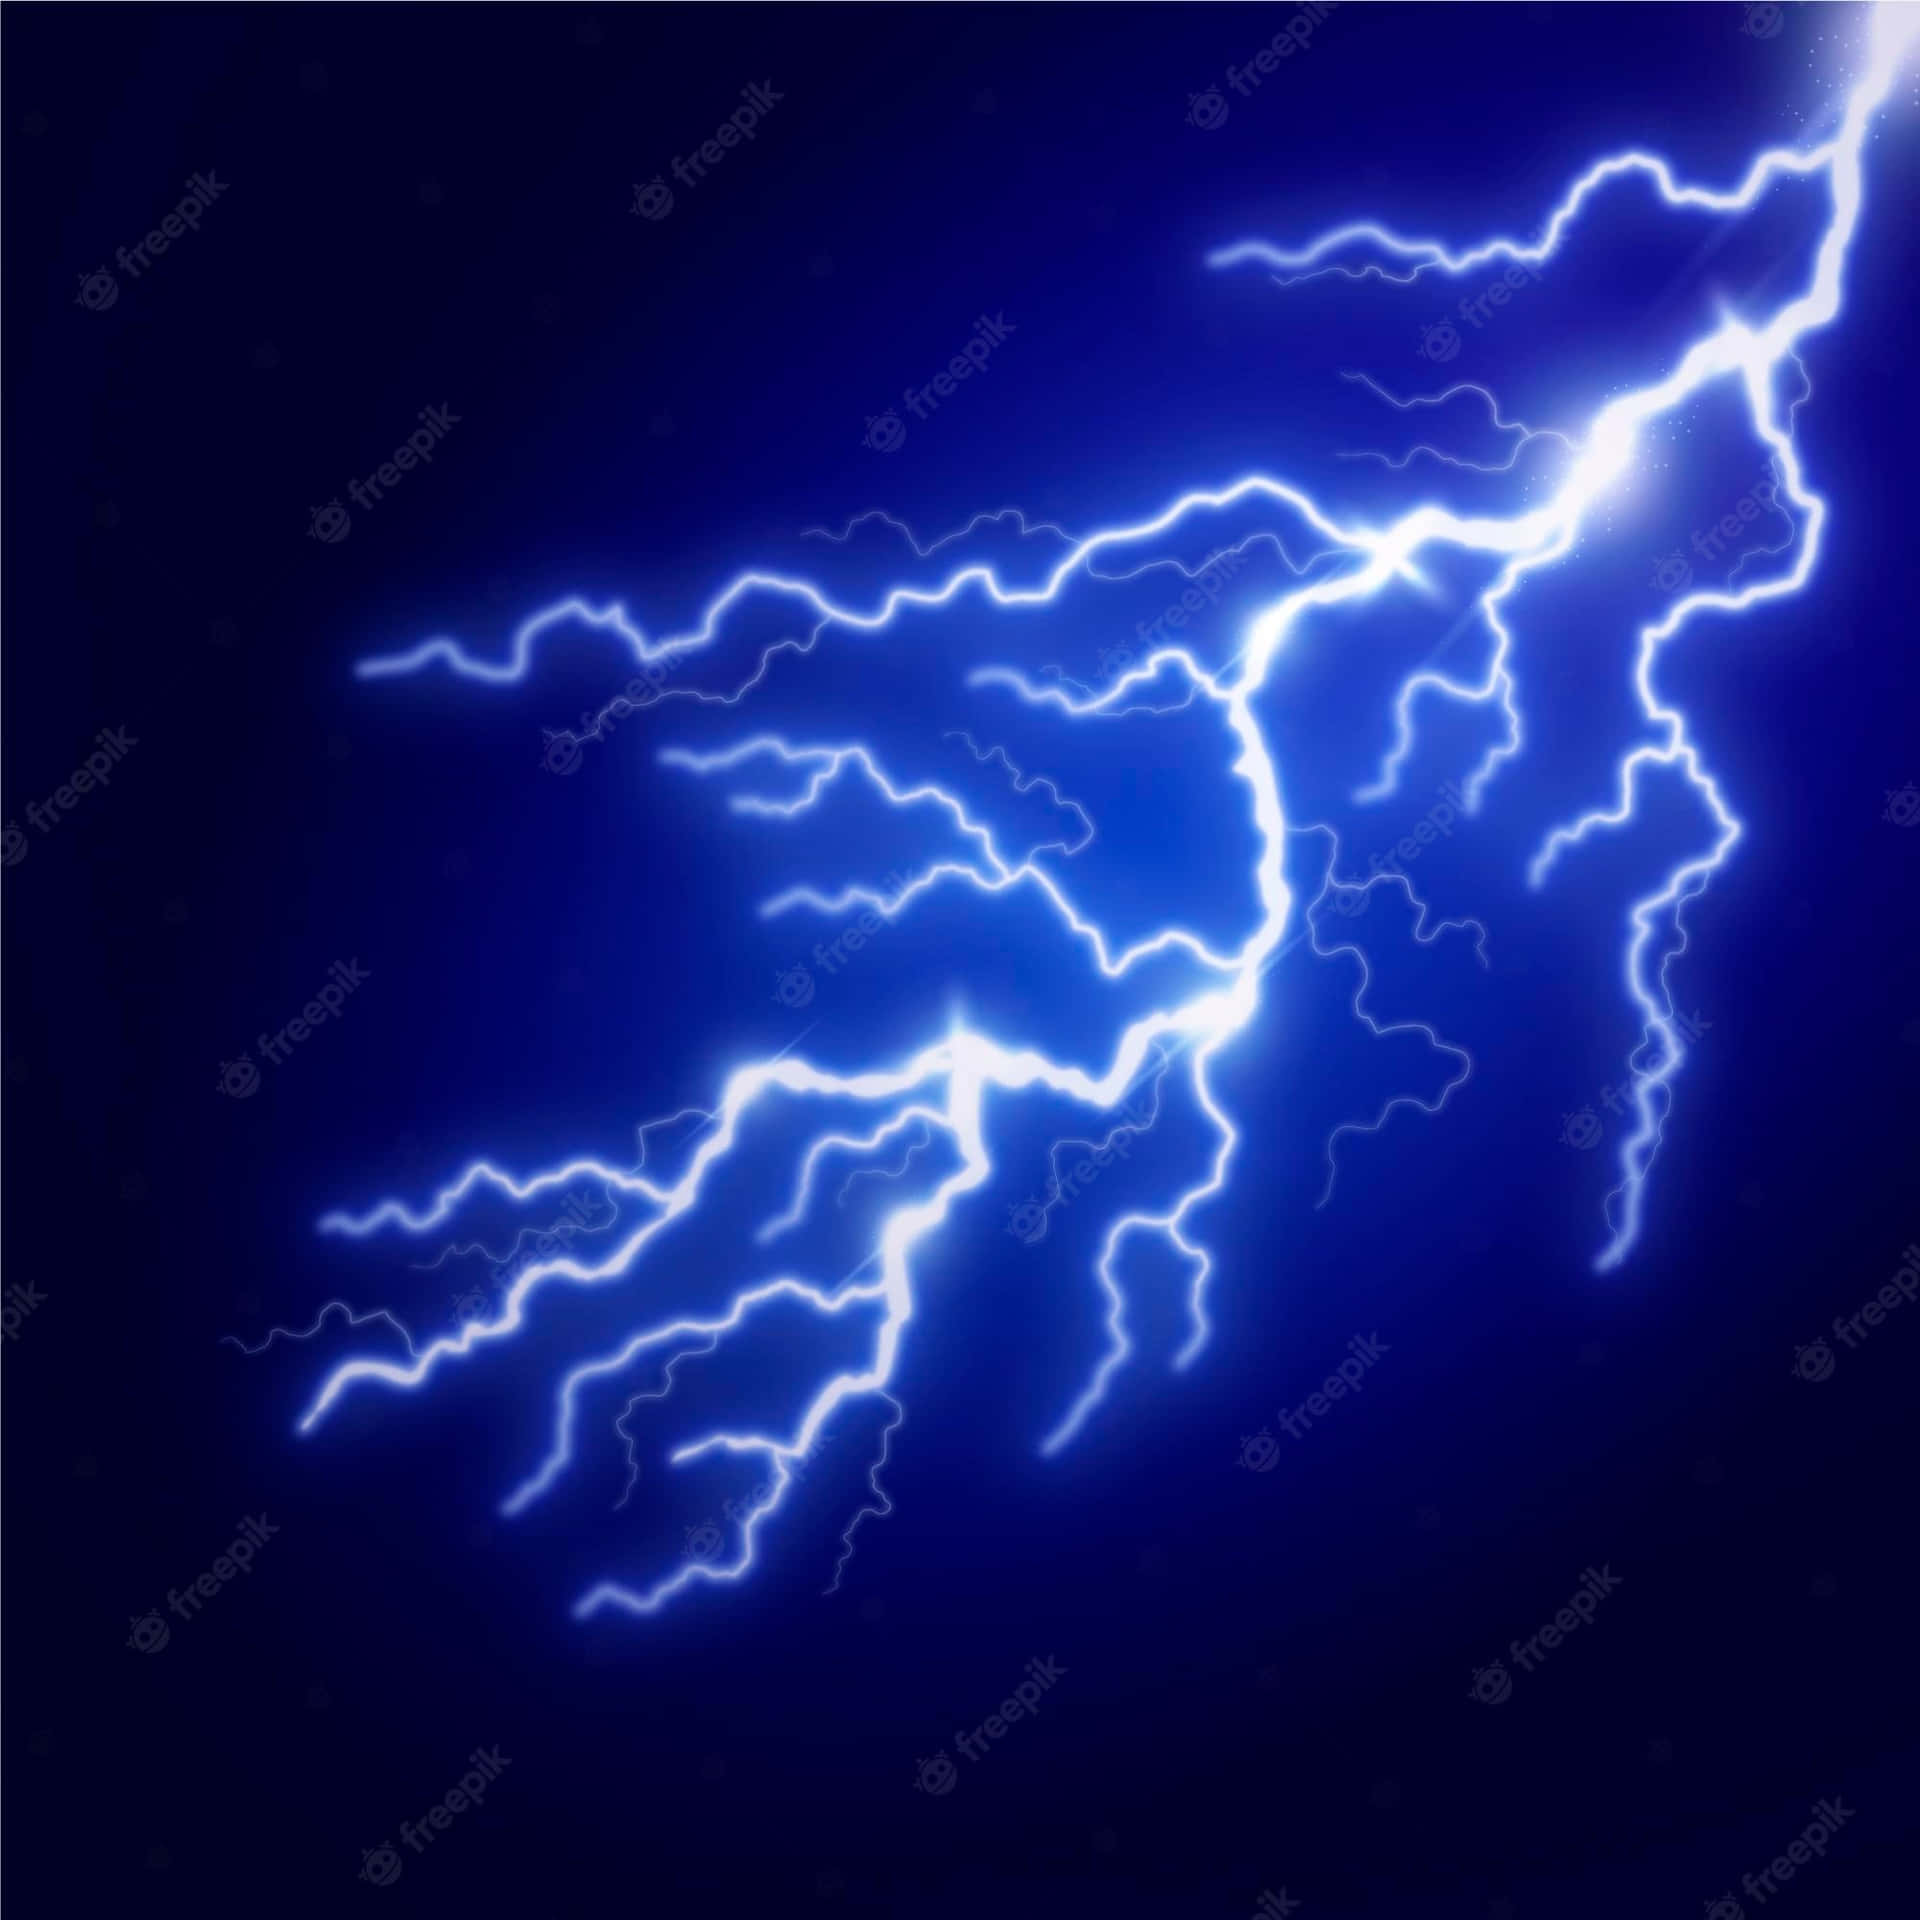 Intense Blue Lightning Strikes Against an Inky Sky